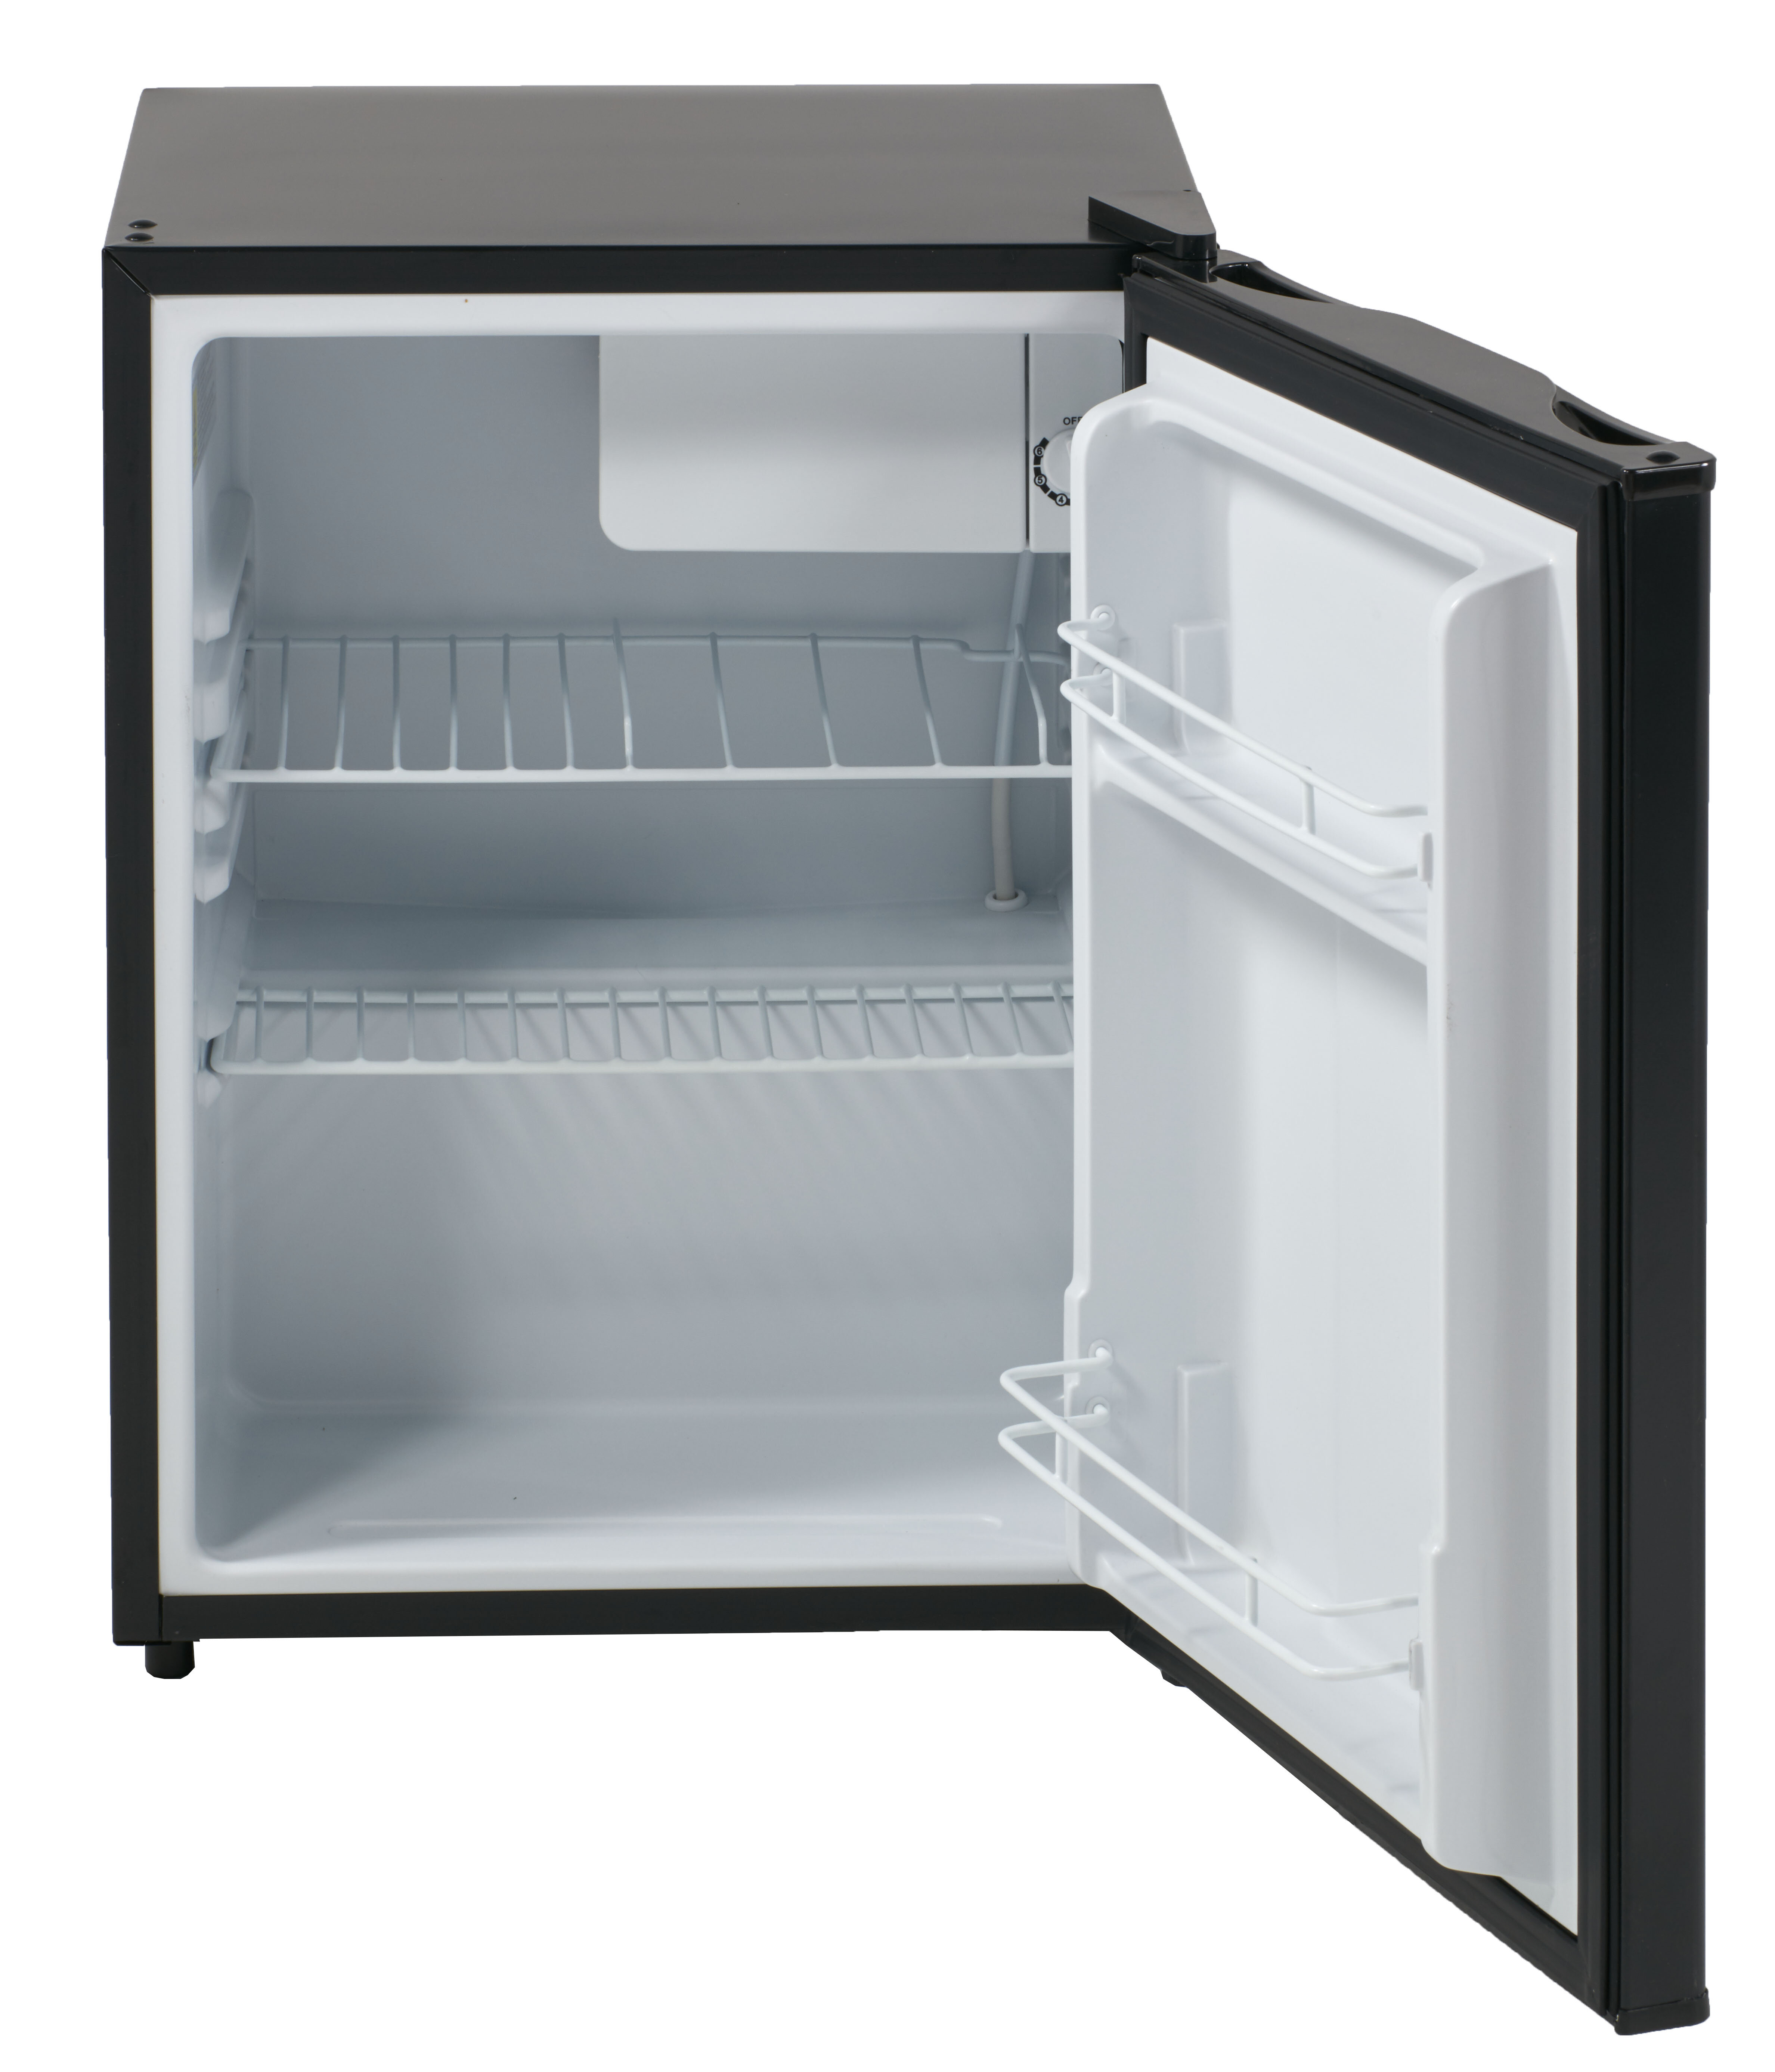 46++ Avanti mini fridge low medium high ideas in 2021 